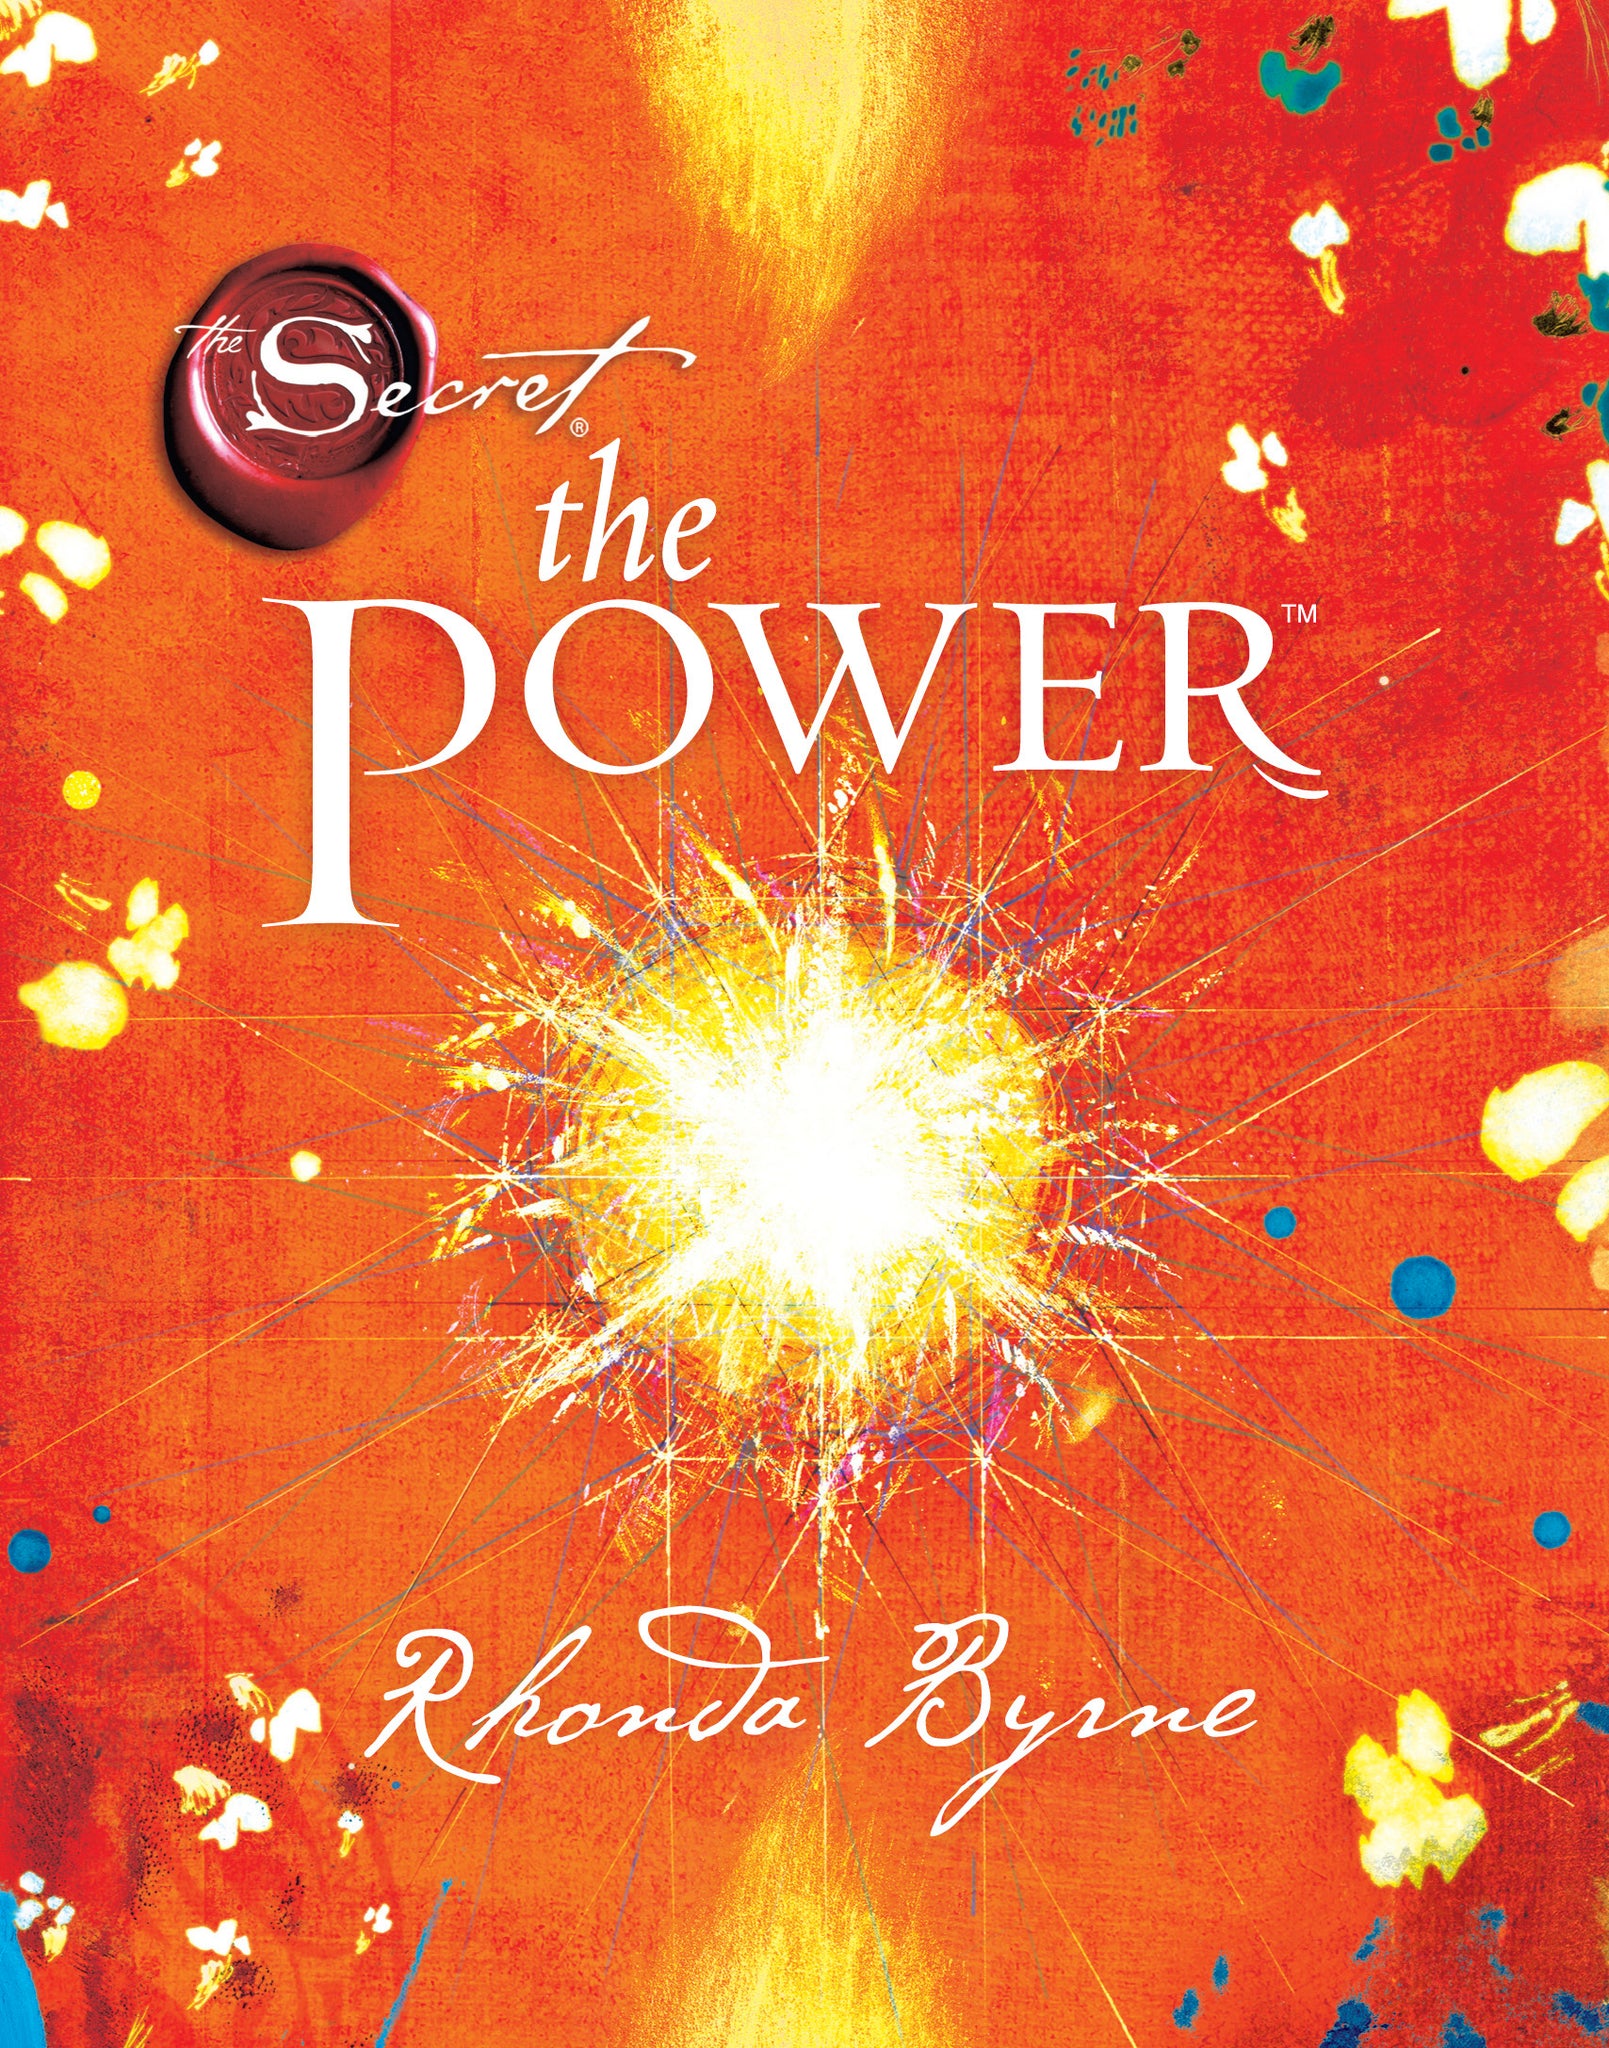 The Power (The Secret #2) by Rhonda Byrne